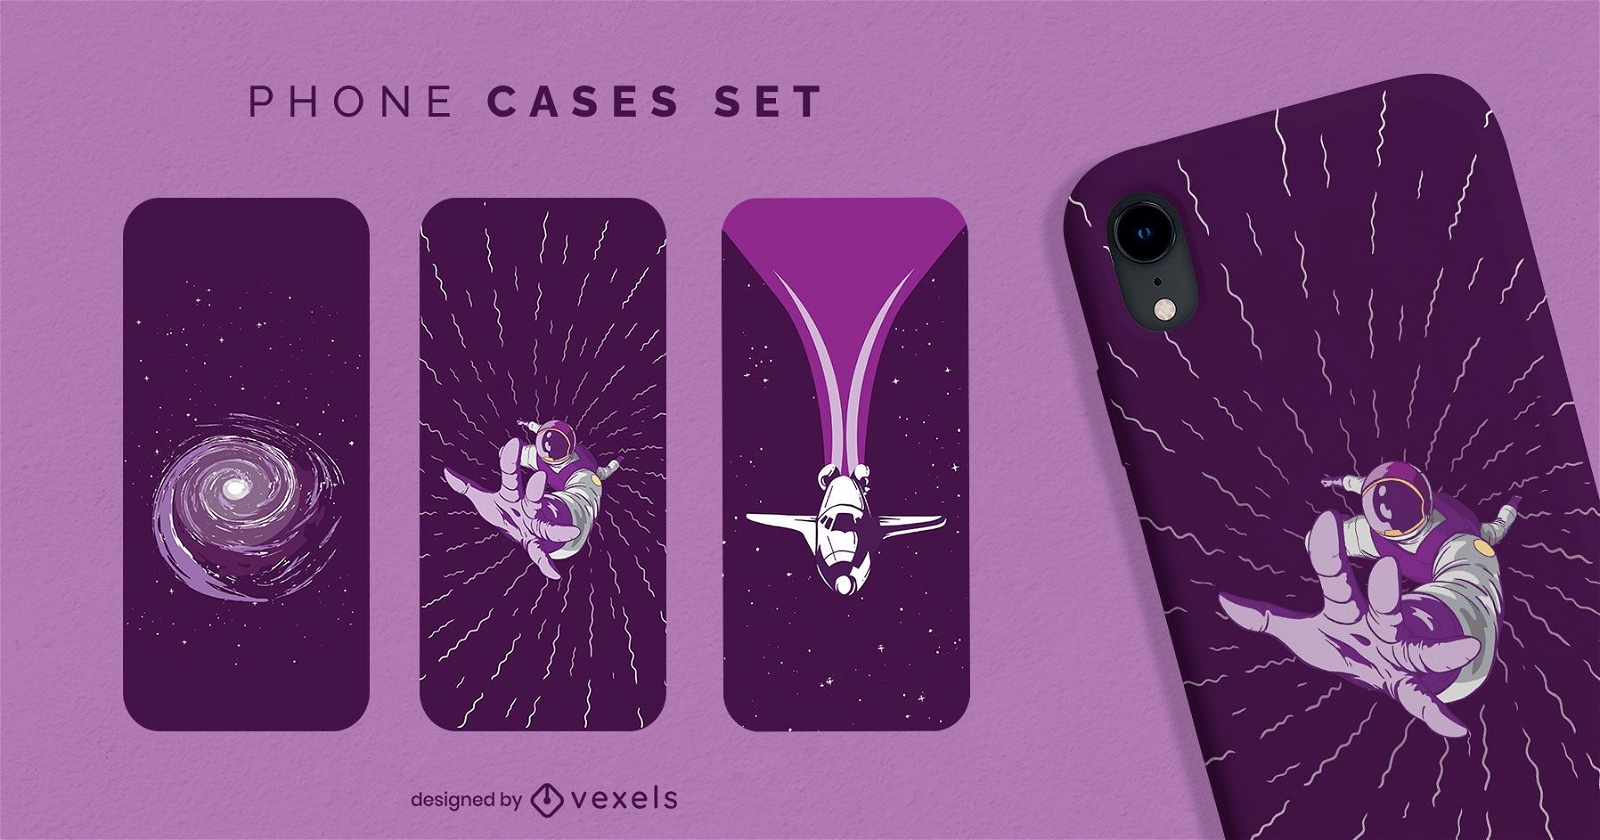 Space phone case set